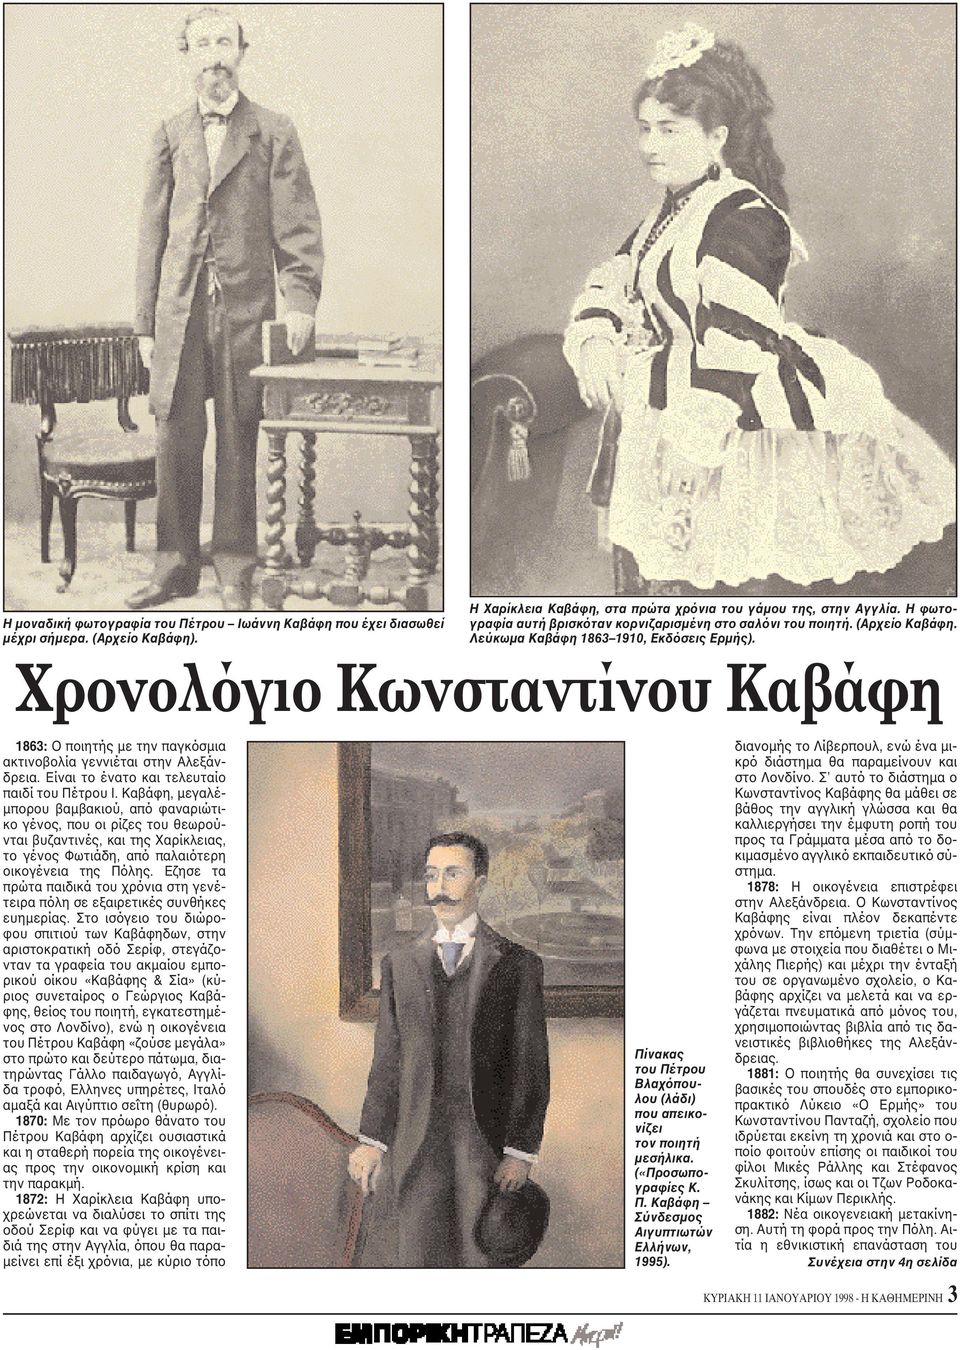 Xρονολόγιο Kωνσταντίνου Kαβάφη 1863: O ποιητής με την παγκόσμια ακτινοβολία γεννιέται στην Aλεξάνδρεια. Eίναι το ένατο και τελευταίο παιδί του Πέτρου I.